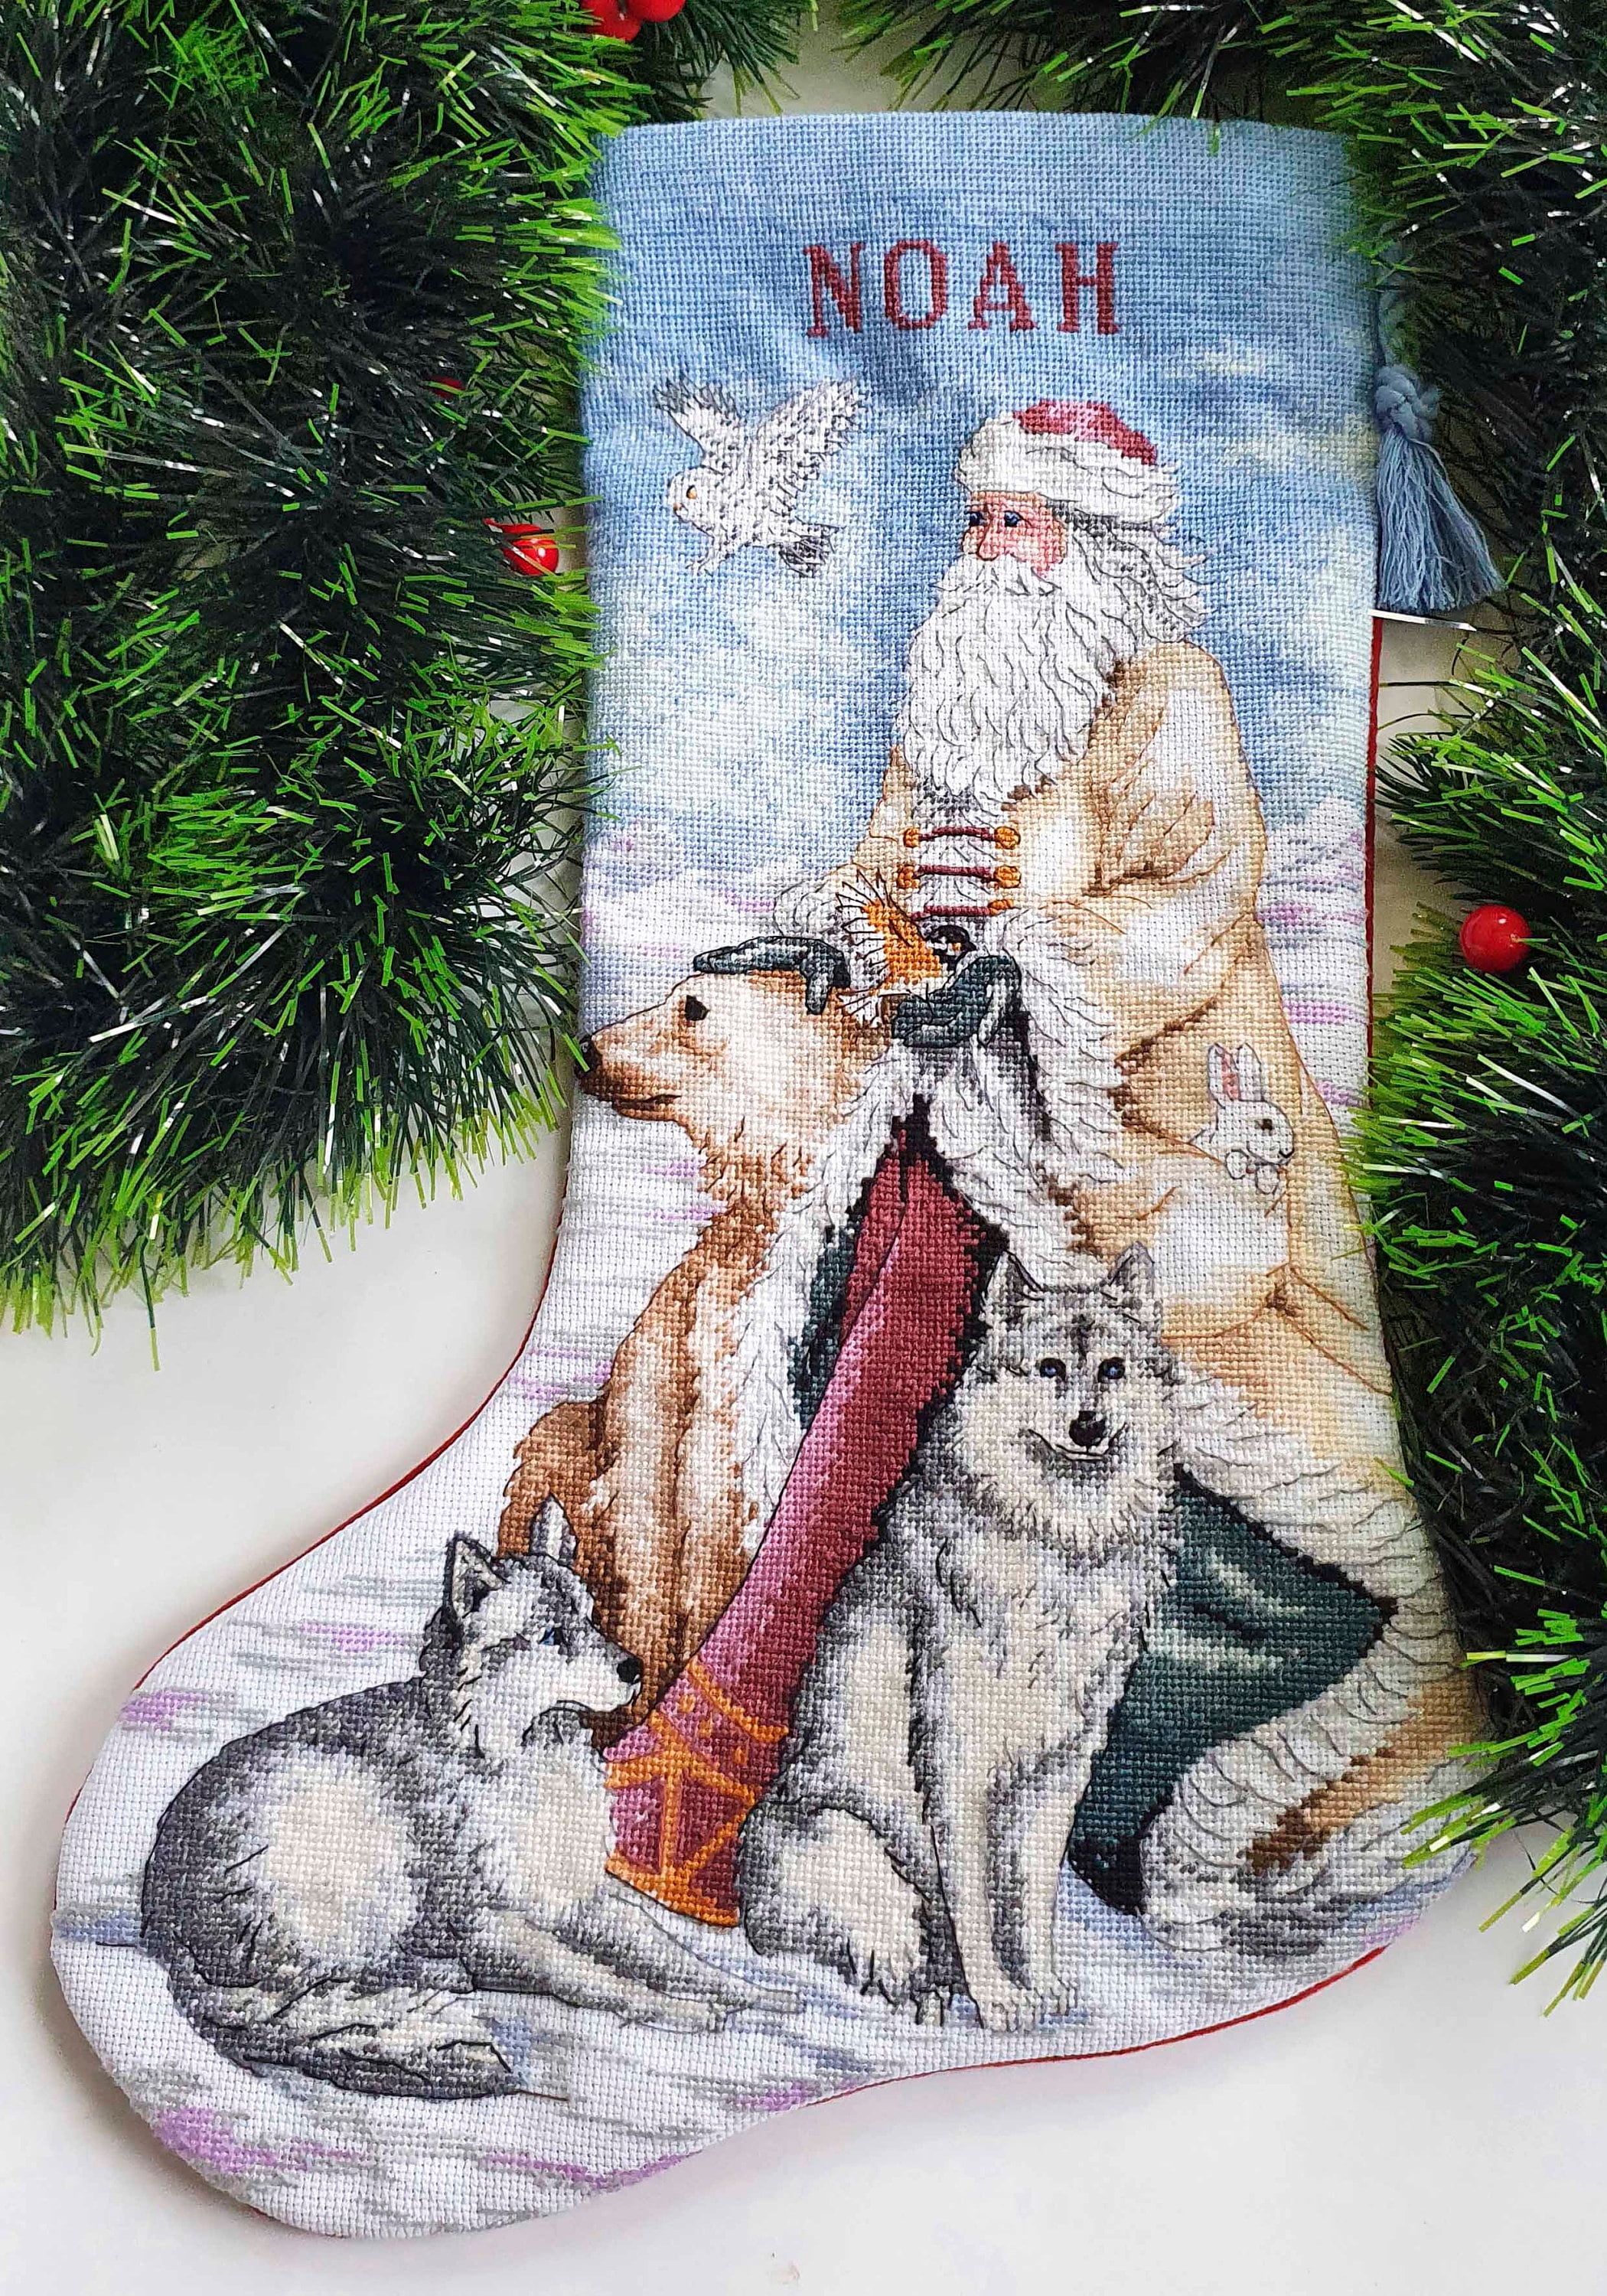 Appalachian Christmas Stocking Kits - Needlepoint Joint